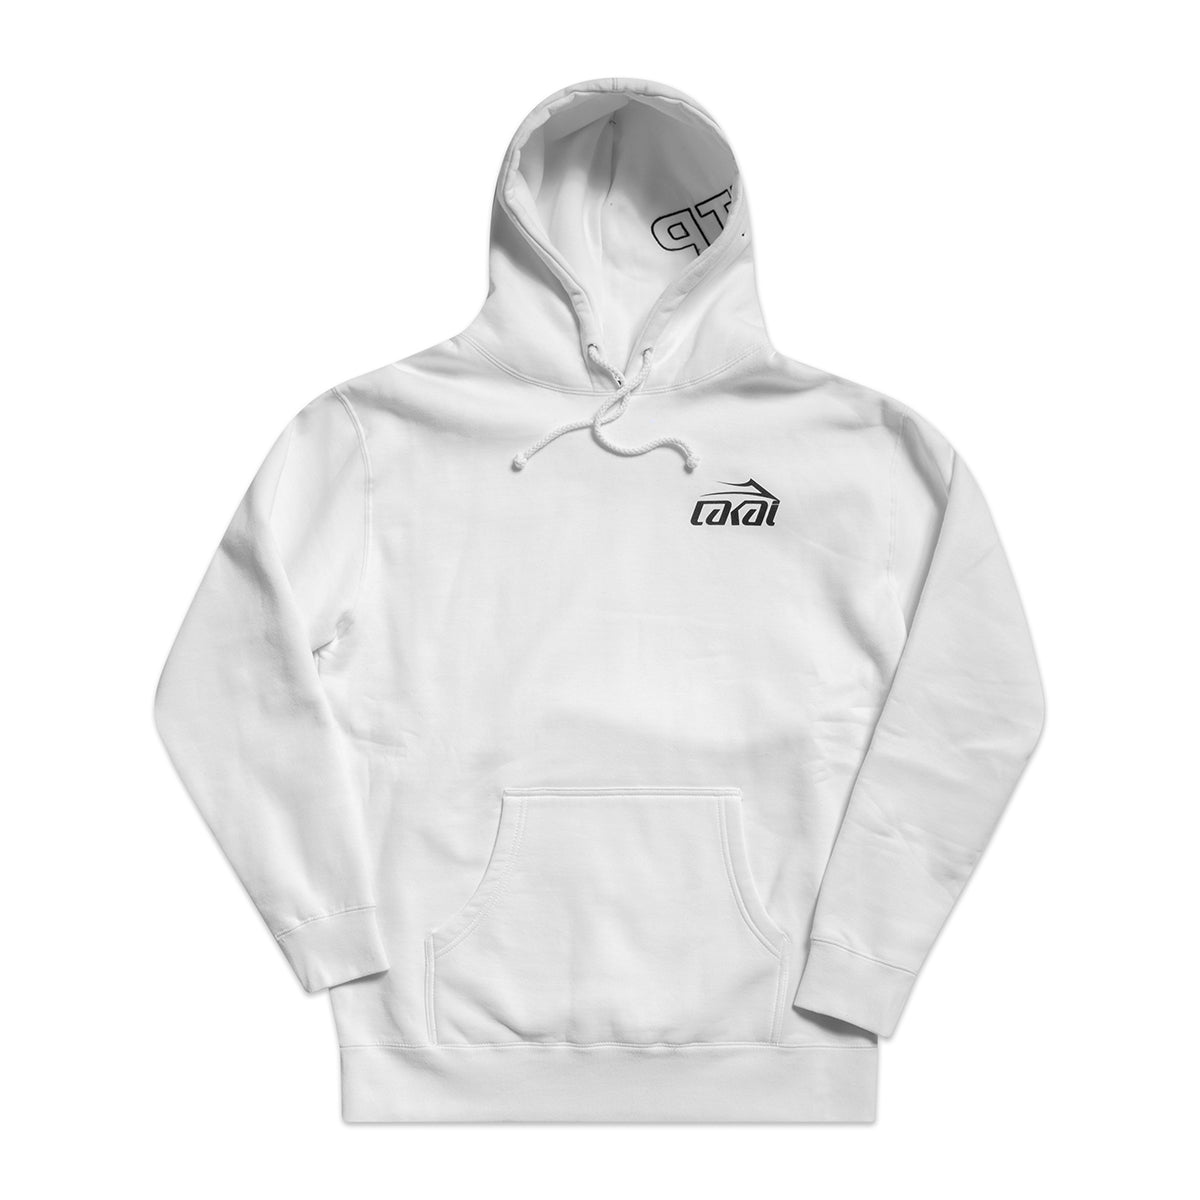 ftp white hoodie